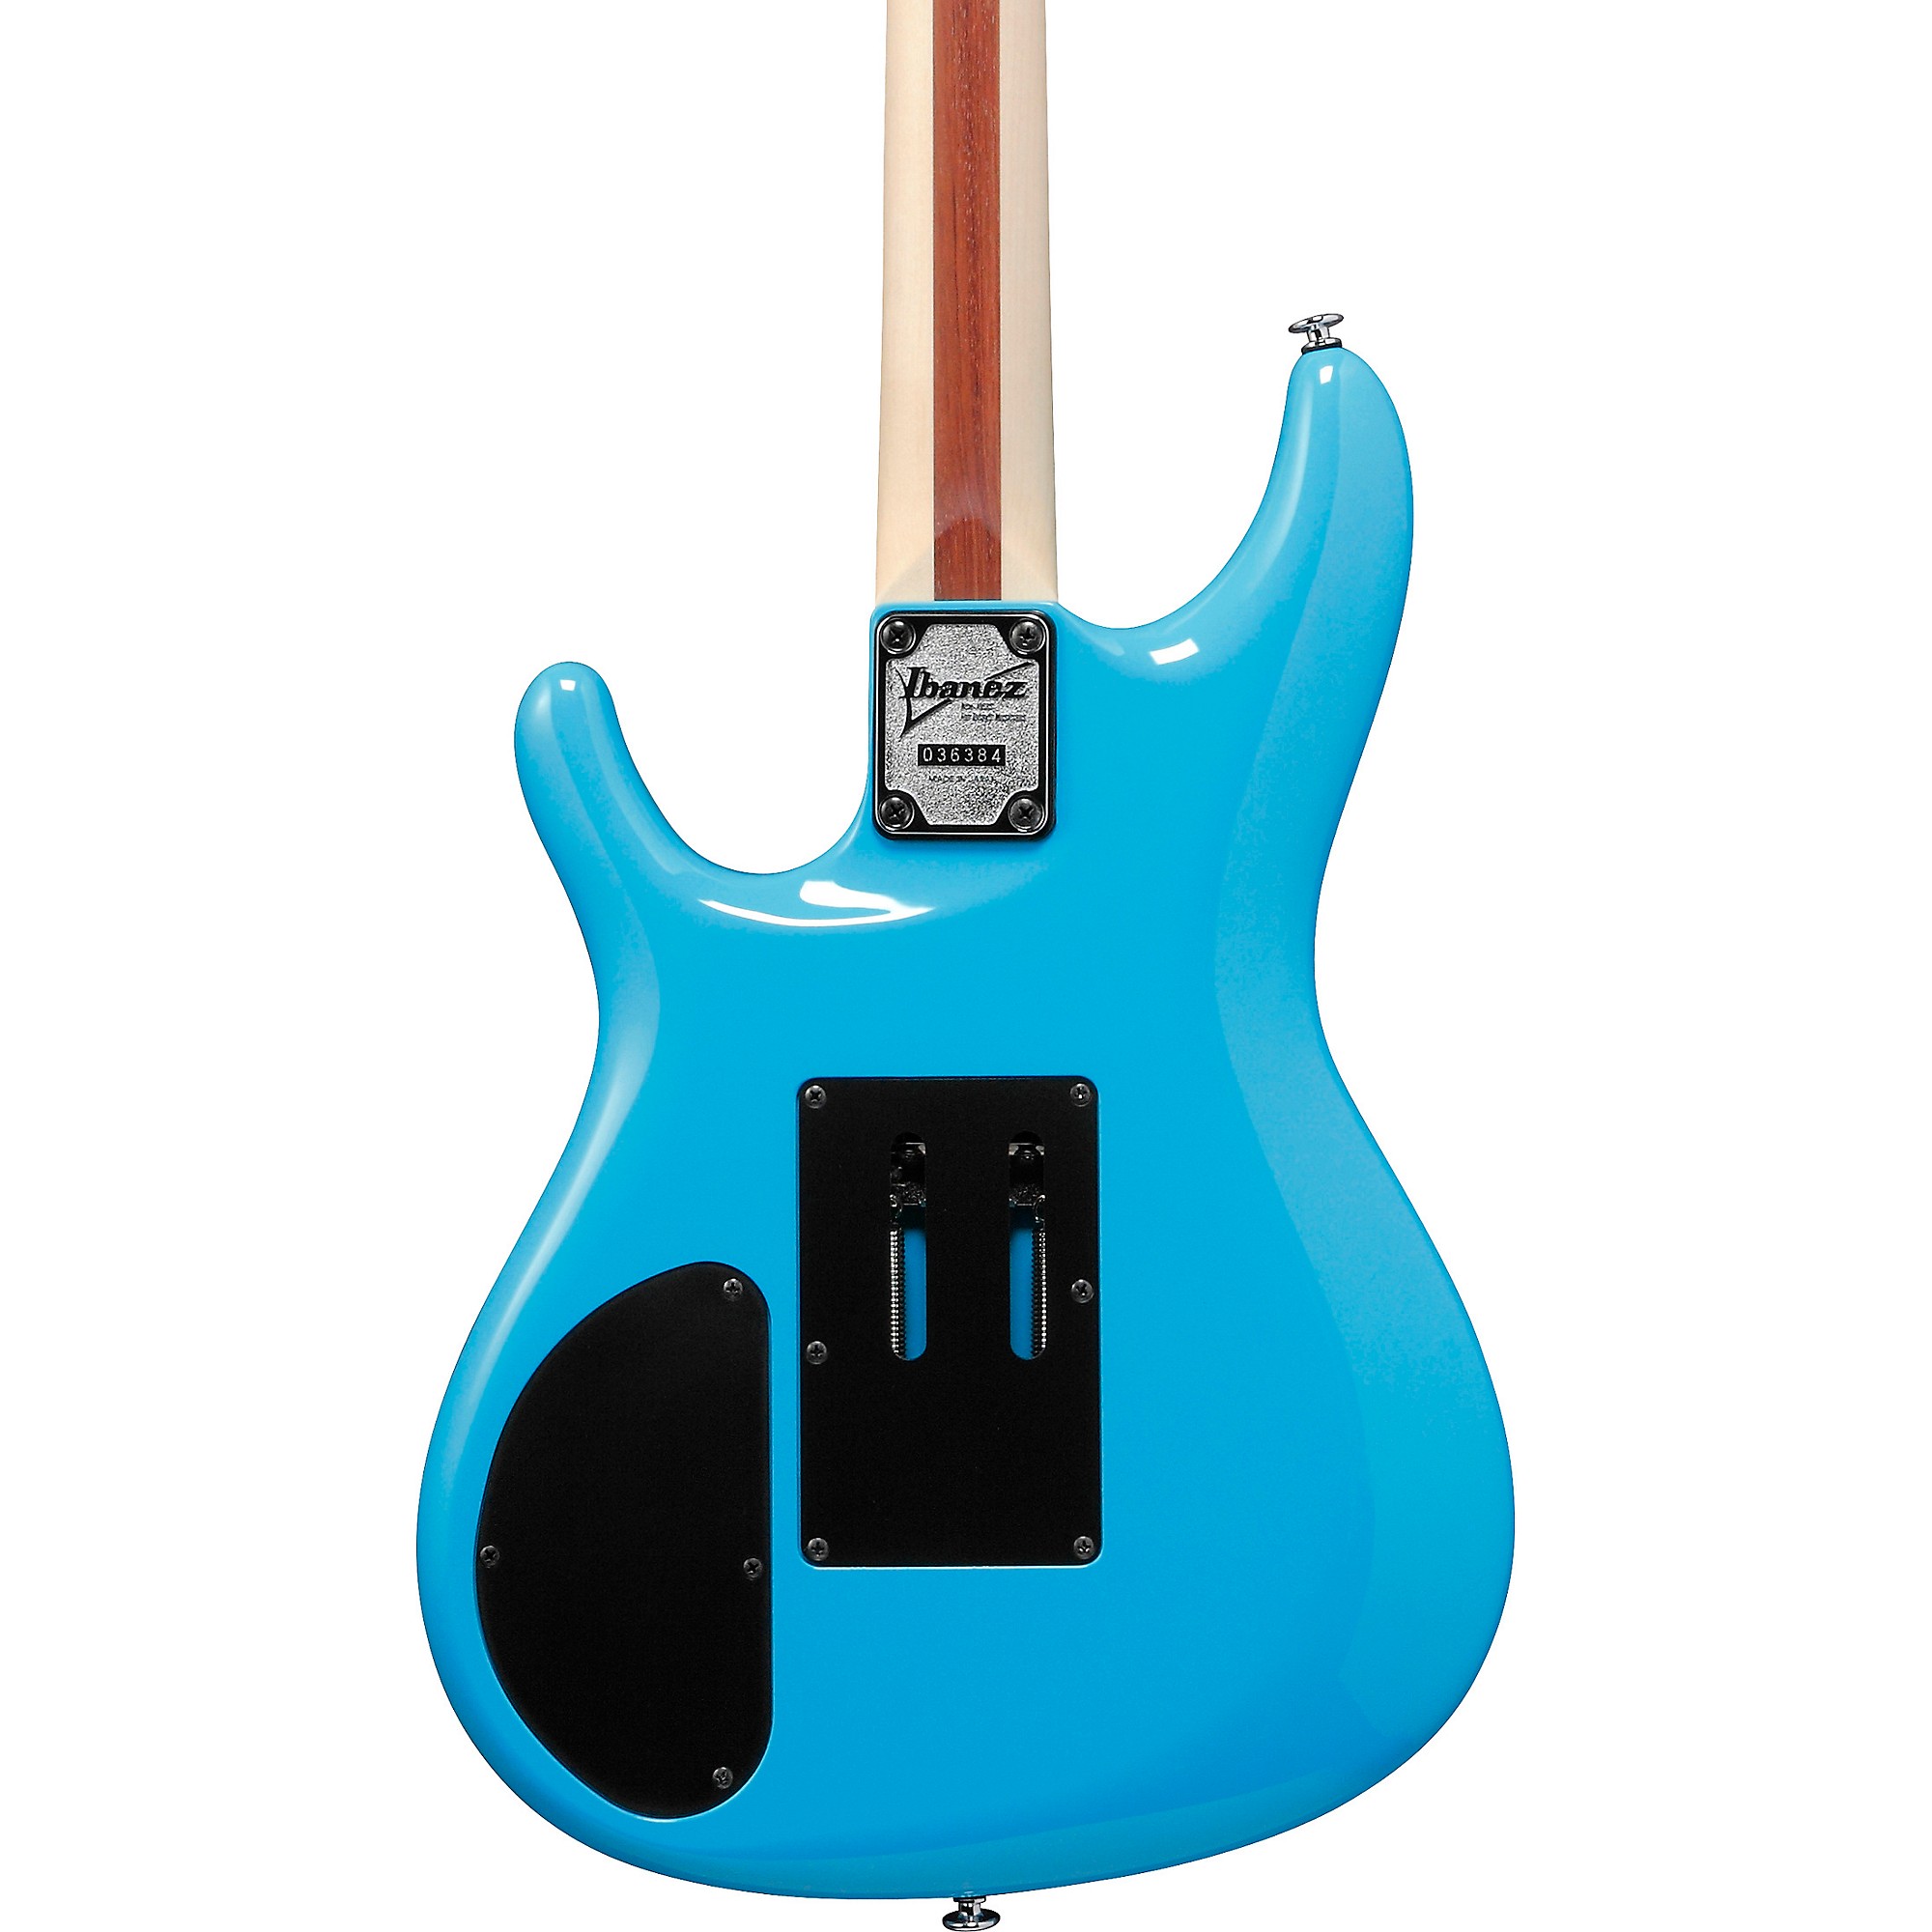 Ibanez JS2410 Joe Satriani Signature электрогитара небесно-голубого цвета электрогитара ibanez joe satriani signature js2450 muscle car purple joe satriani signature js2450 electric guitar